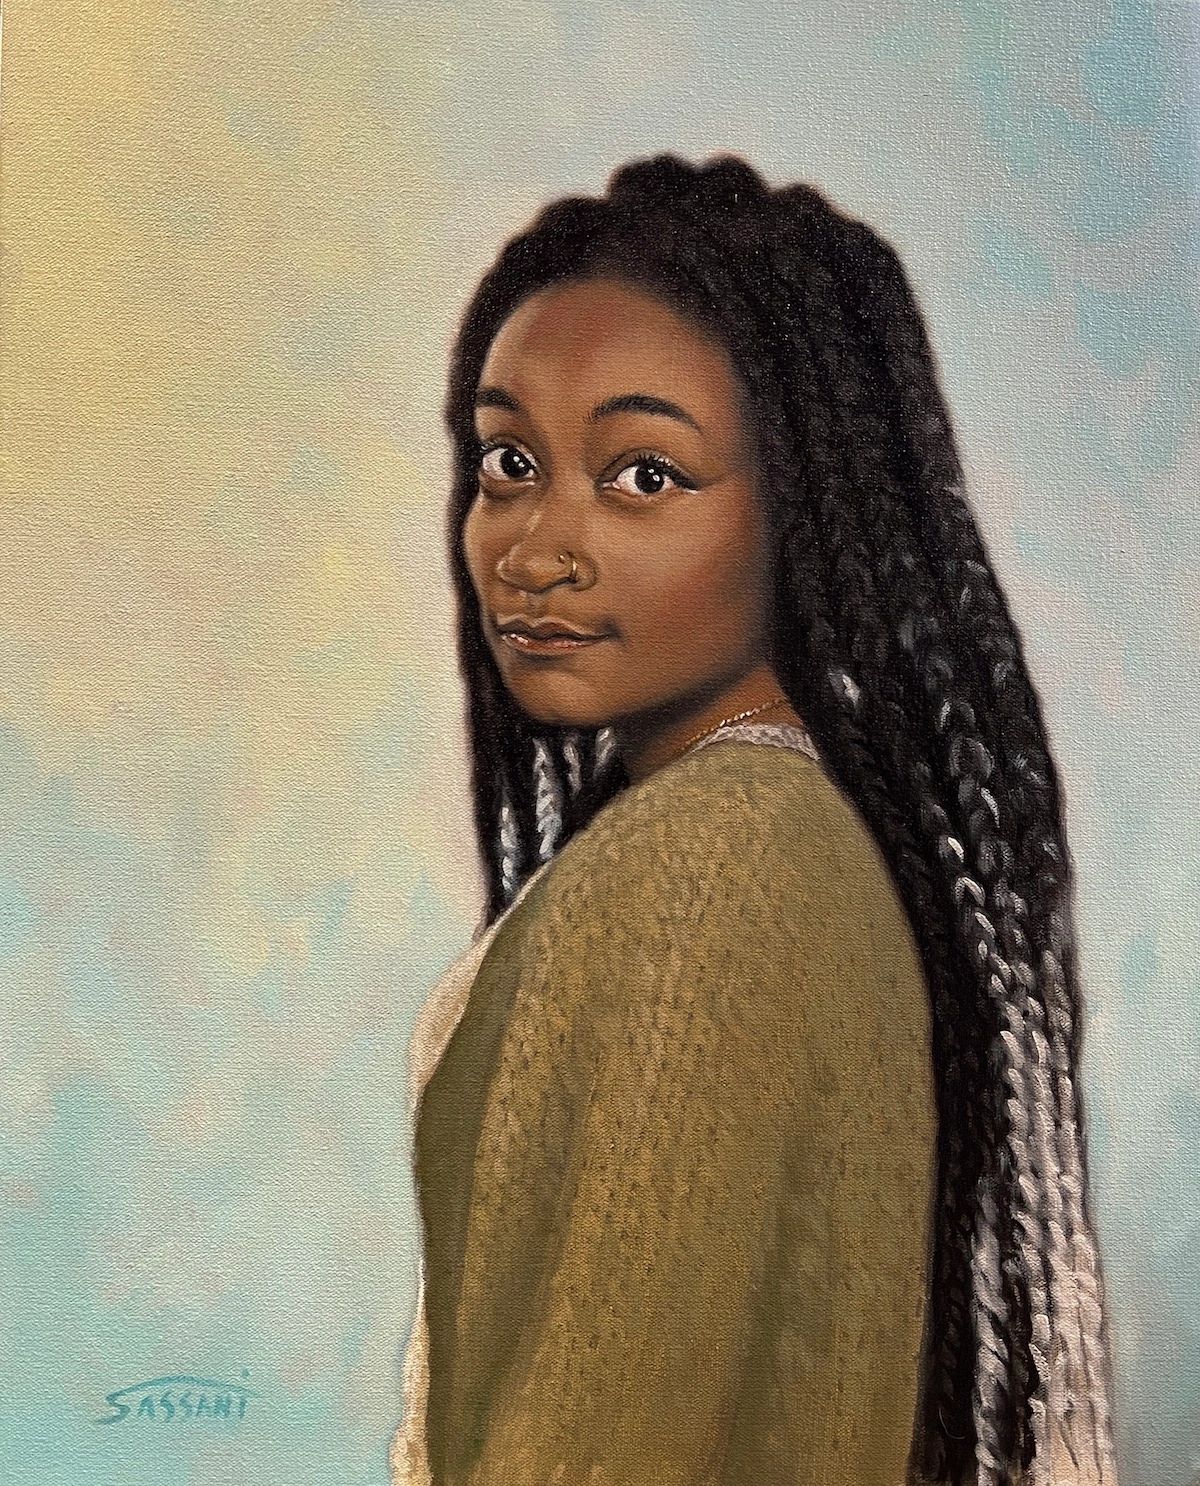 Kiandra, Oil painting, portrait, girl, braids, green sweater, pretty black girl, nose ring